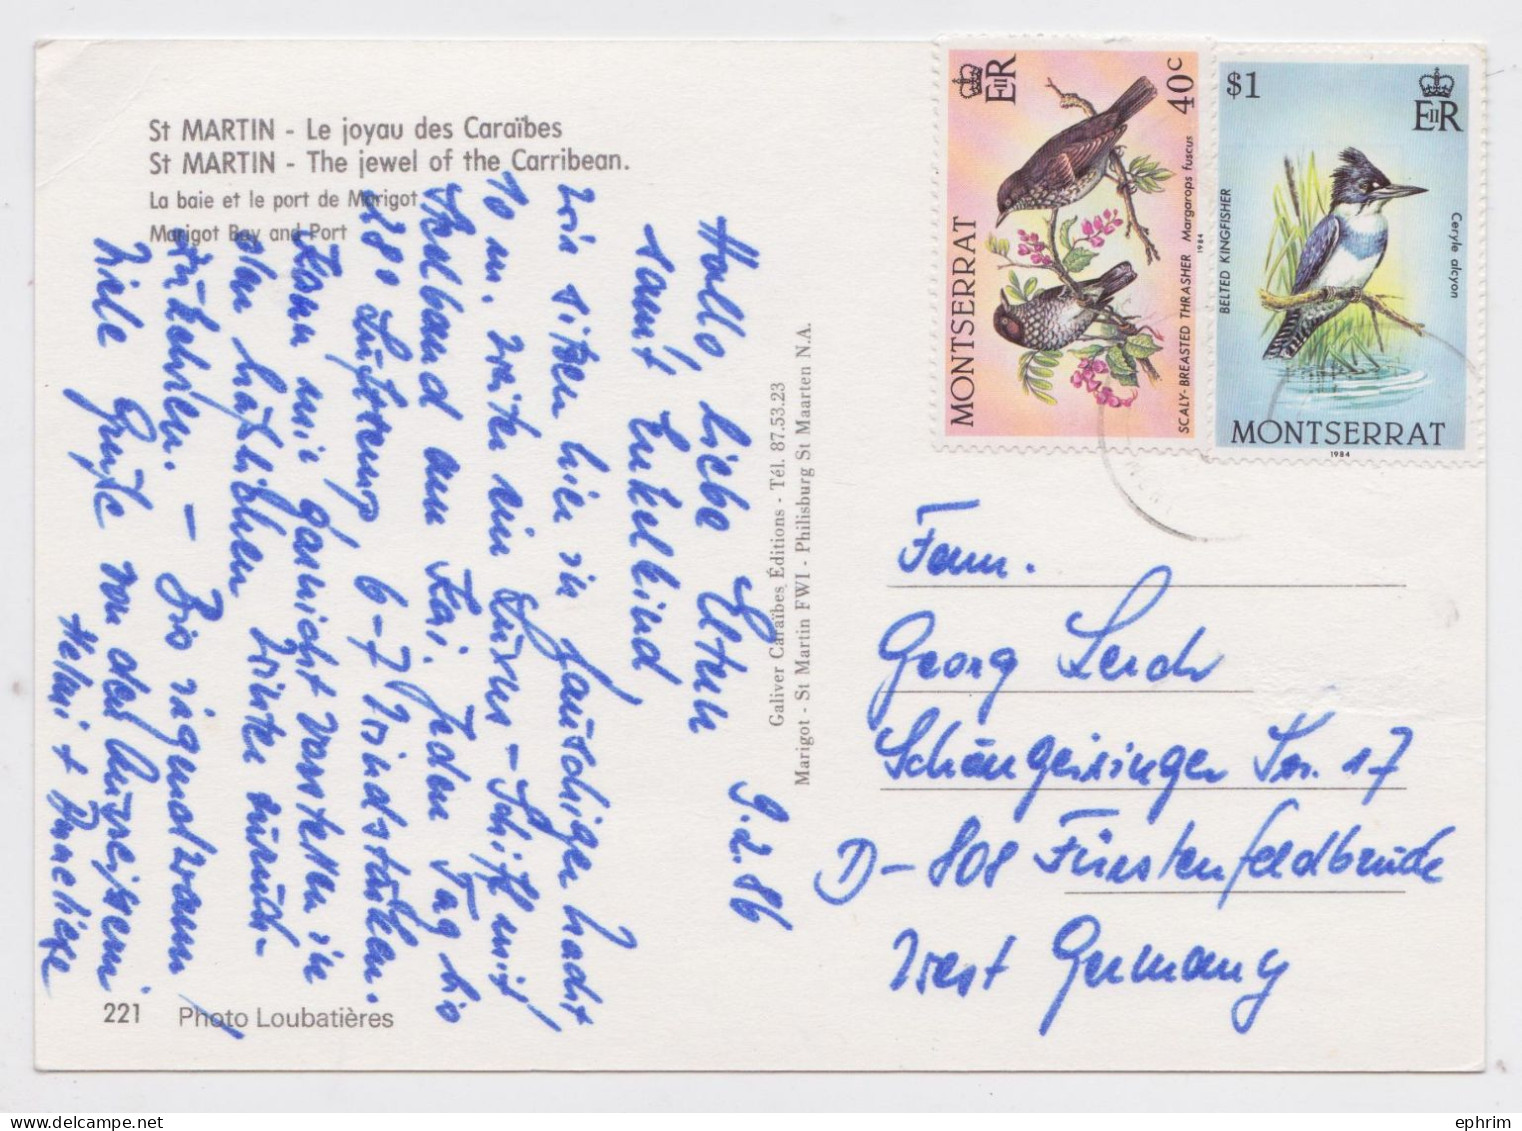 Montserrat Carte Postale Timbre Oiseau Martin-Pêcheur Kingfisher Bird Avers Sello Stamp Air Mail Postcard 1986 - Montserrat